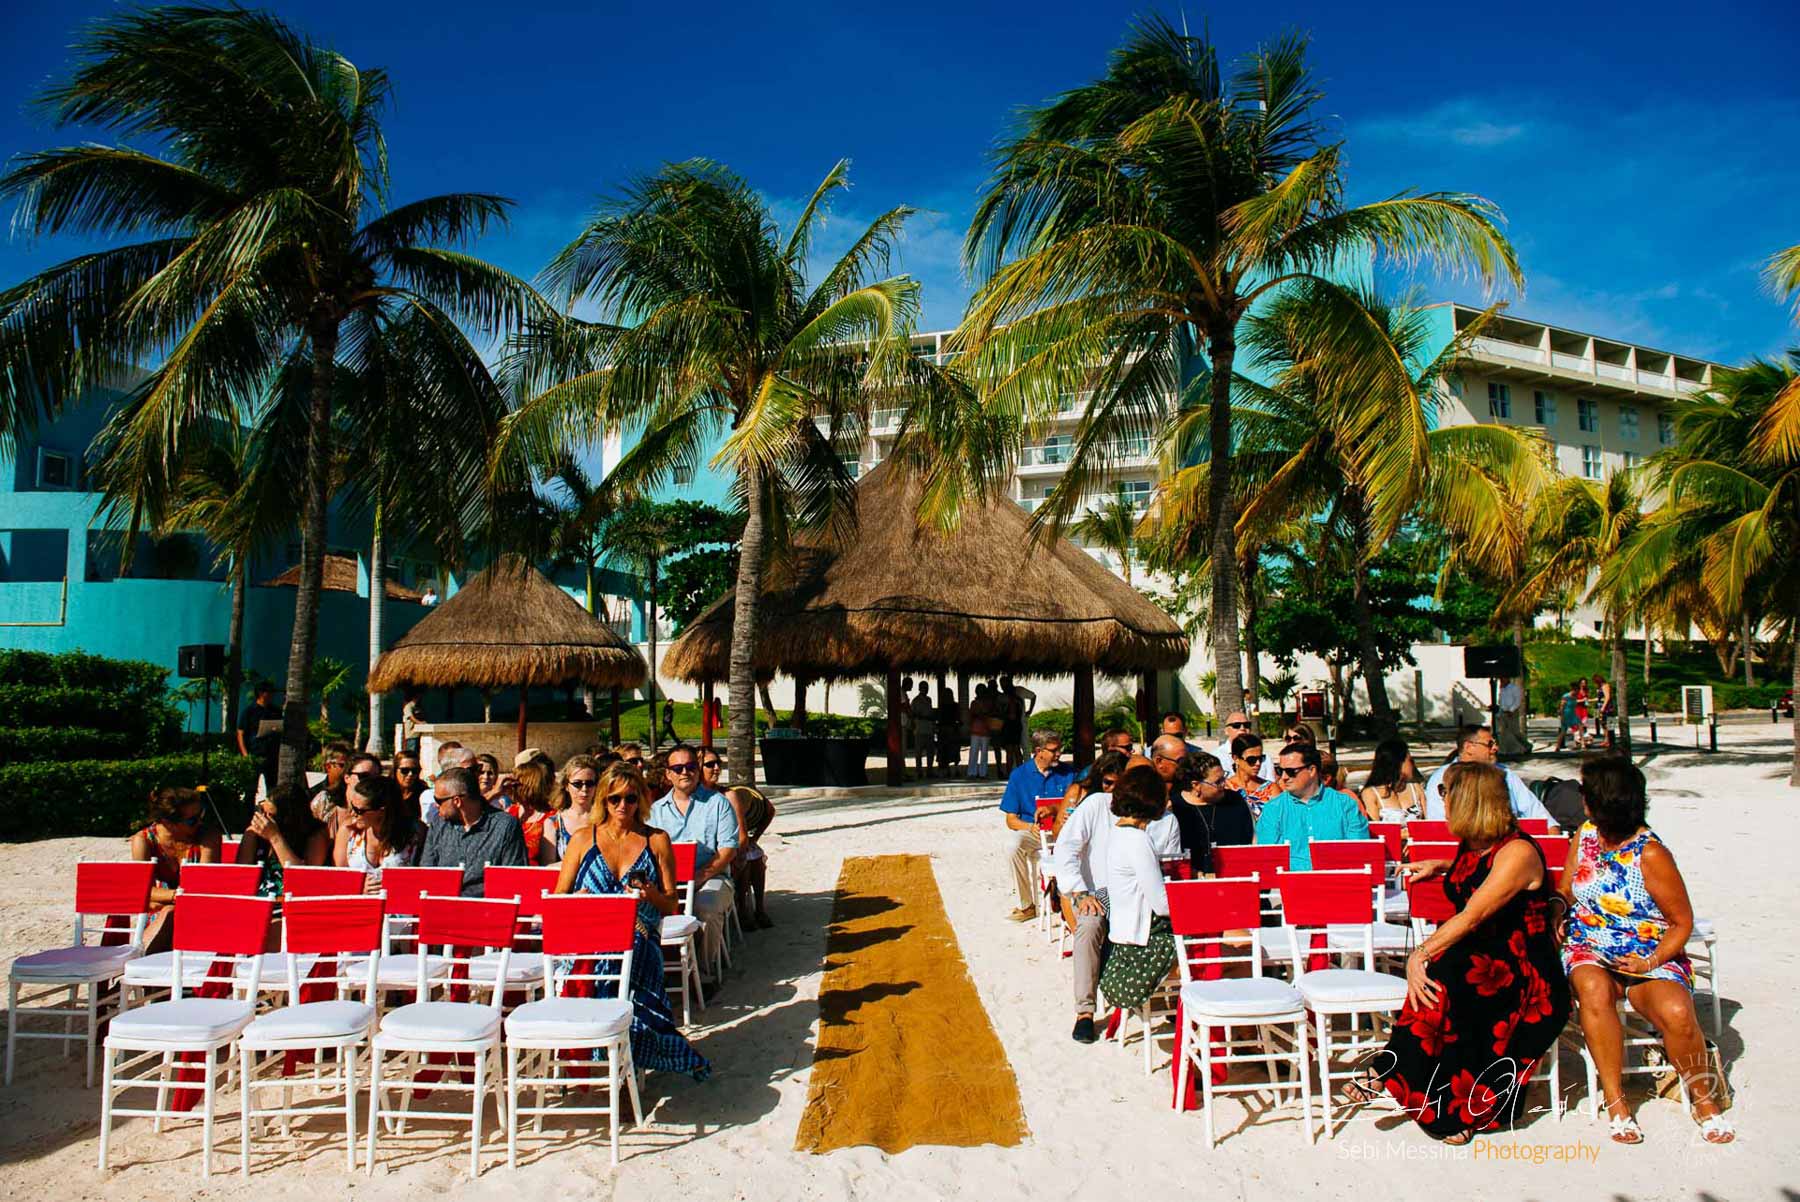 Wedding Westin Cancun – Sebi Messina Photography